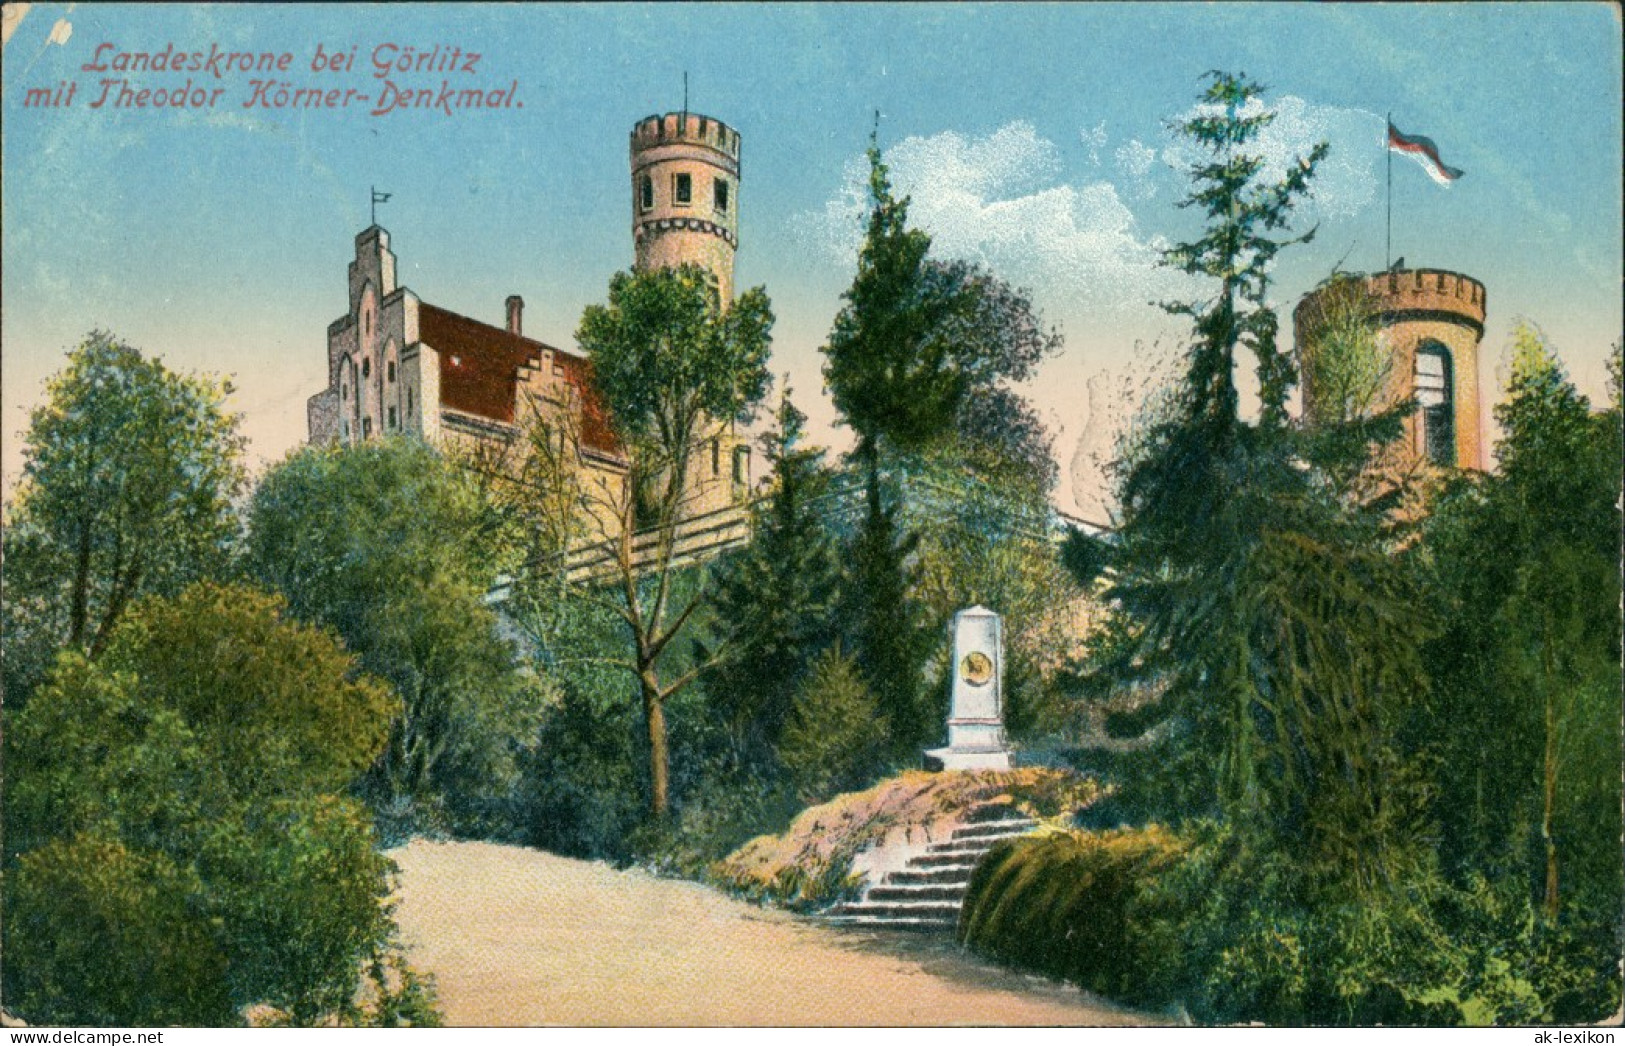 Ansichtskarte Görlitz Zgorzelec Landeskrone, Körner Denkmal 1914 - Goerlitz